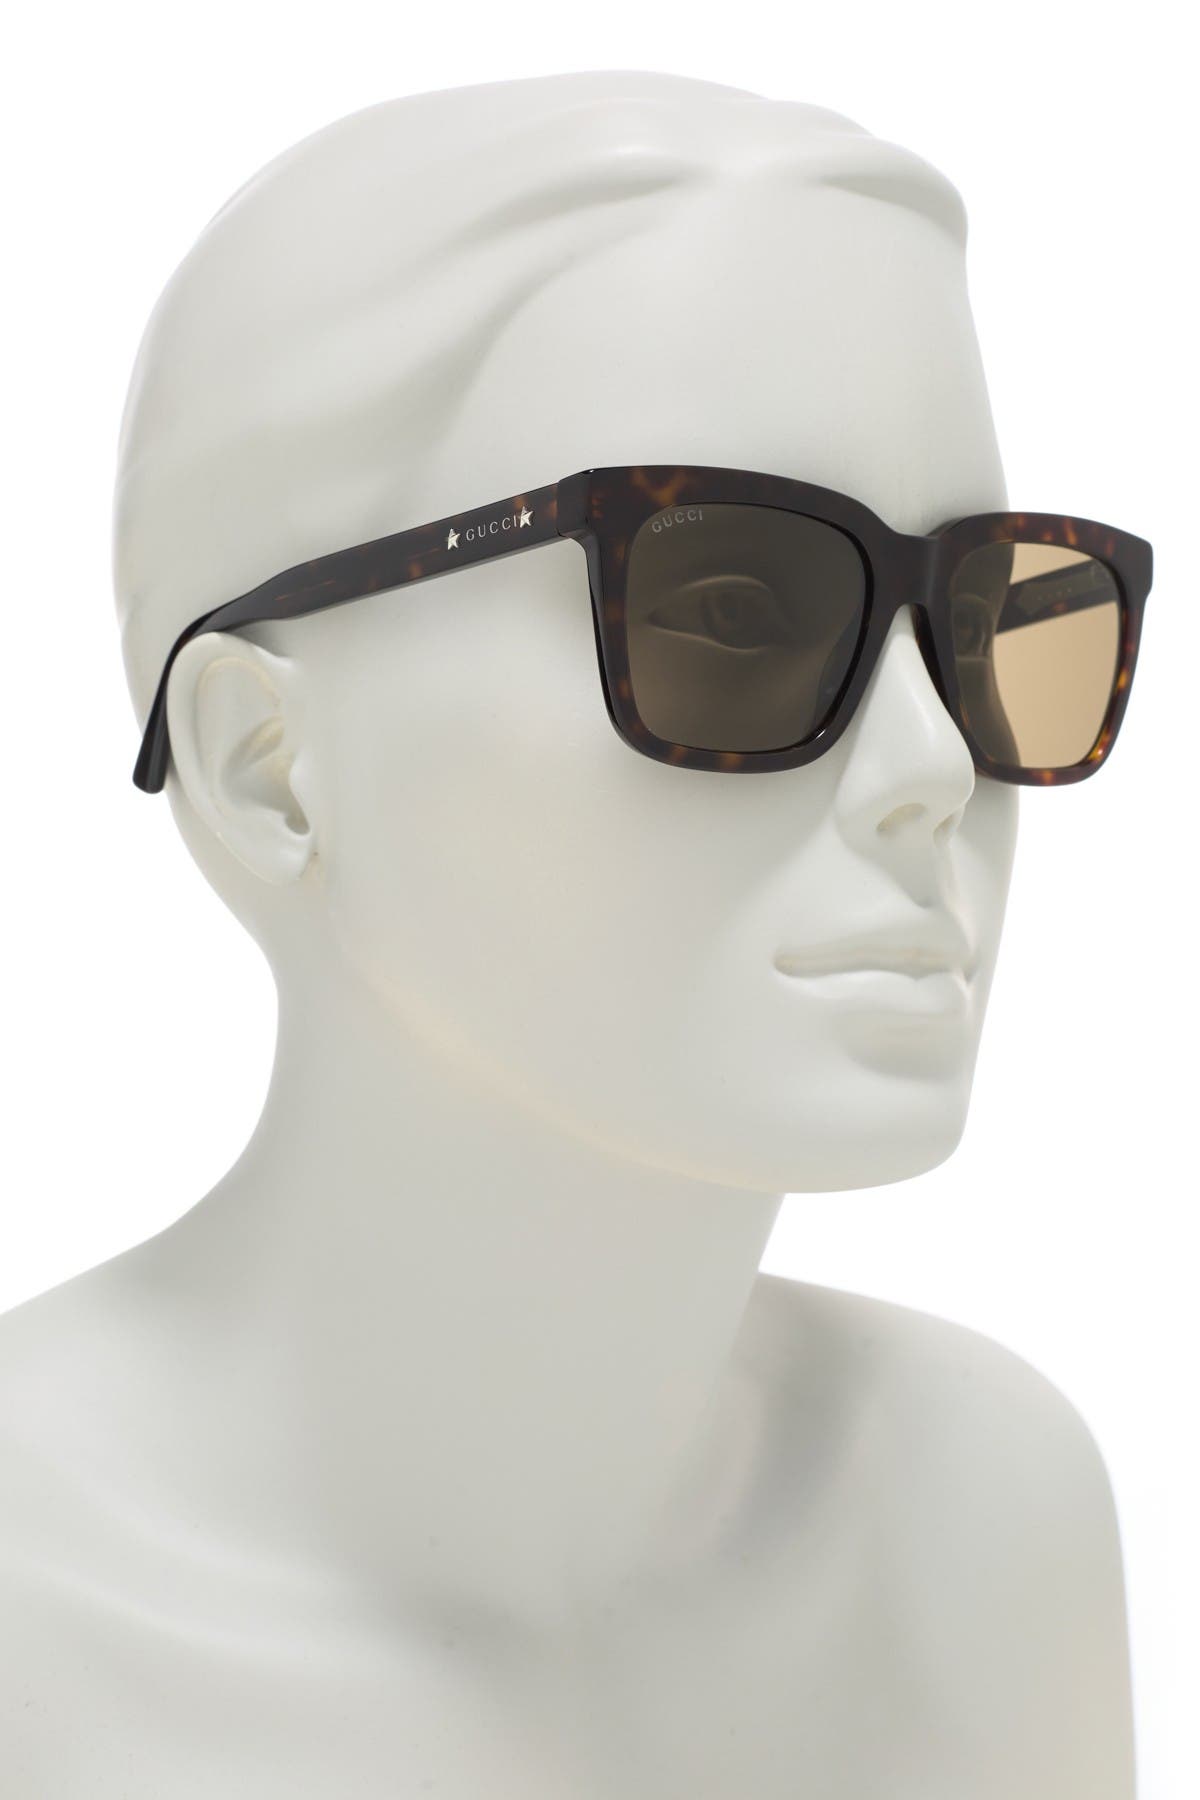 gucci sunglasses at nordstrom rack